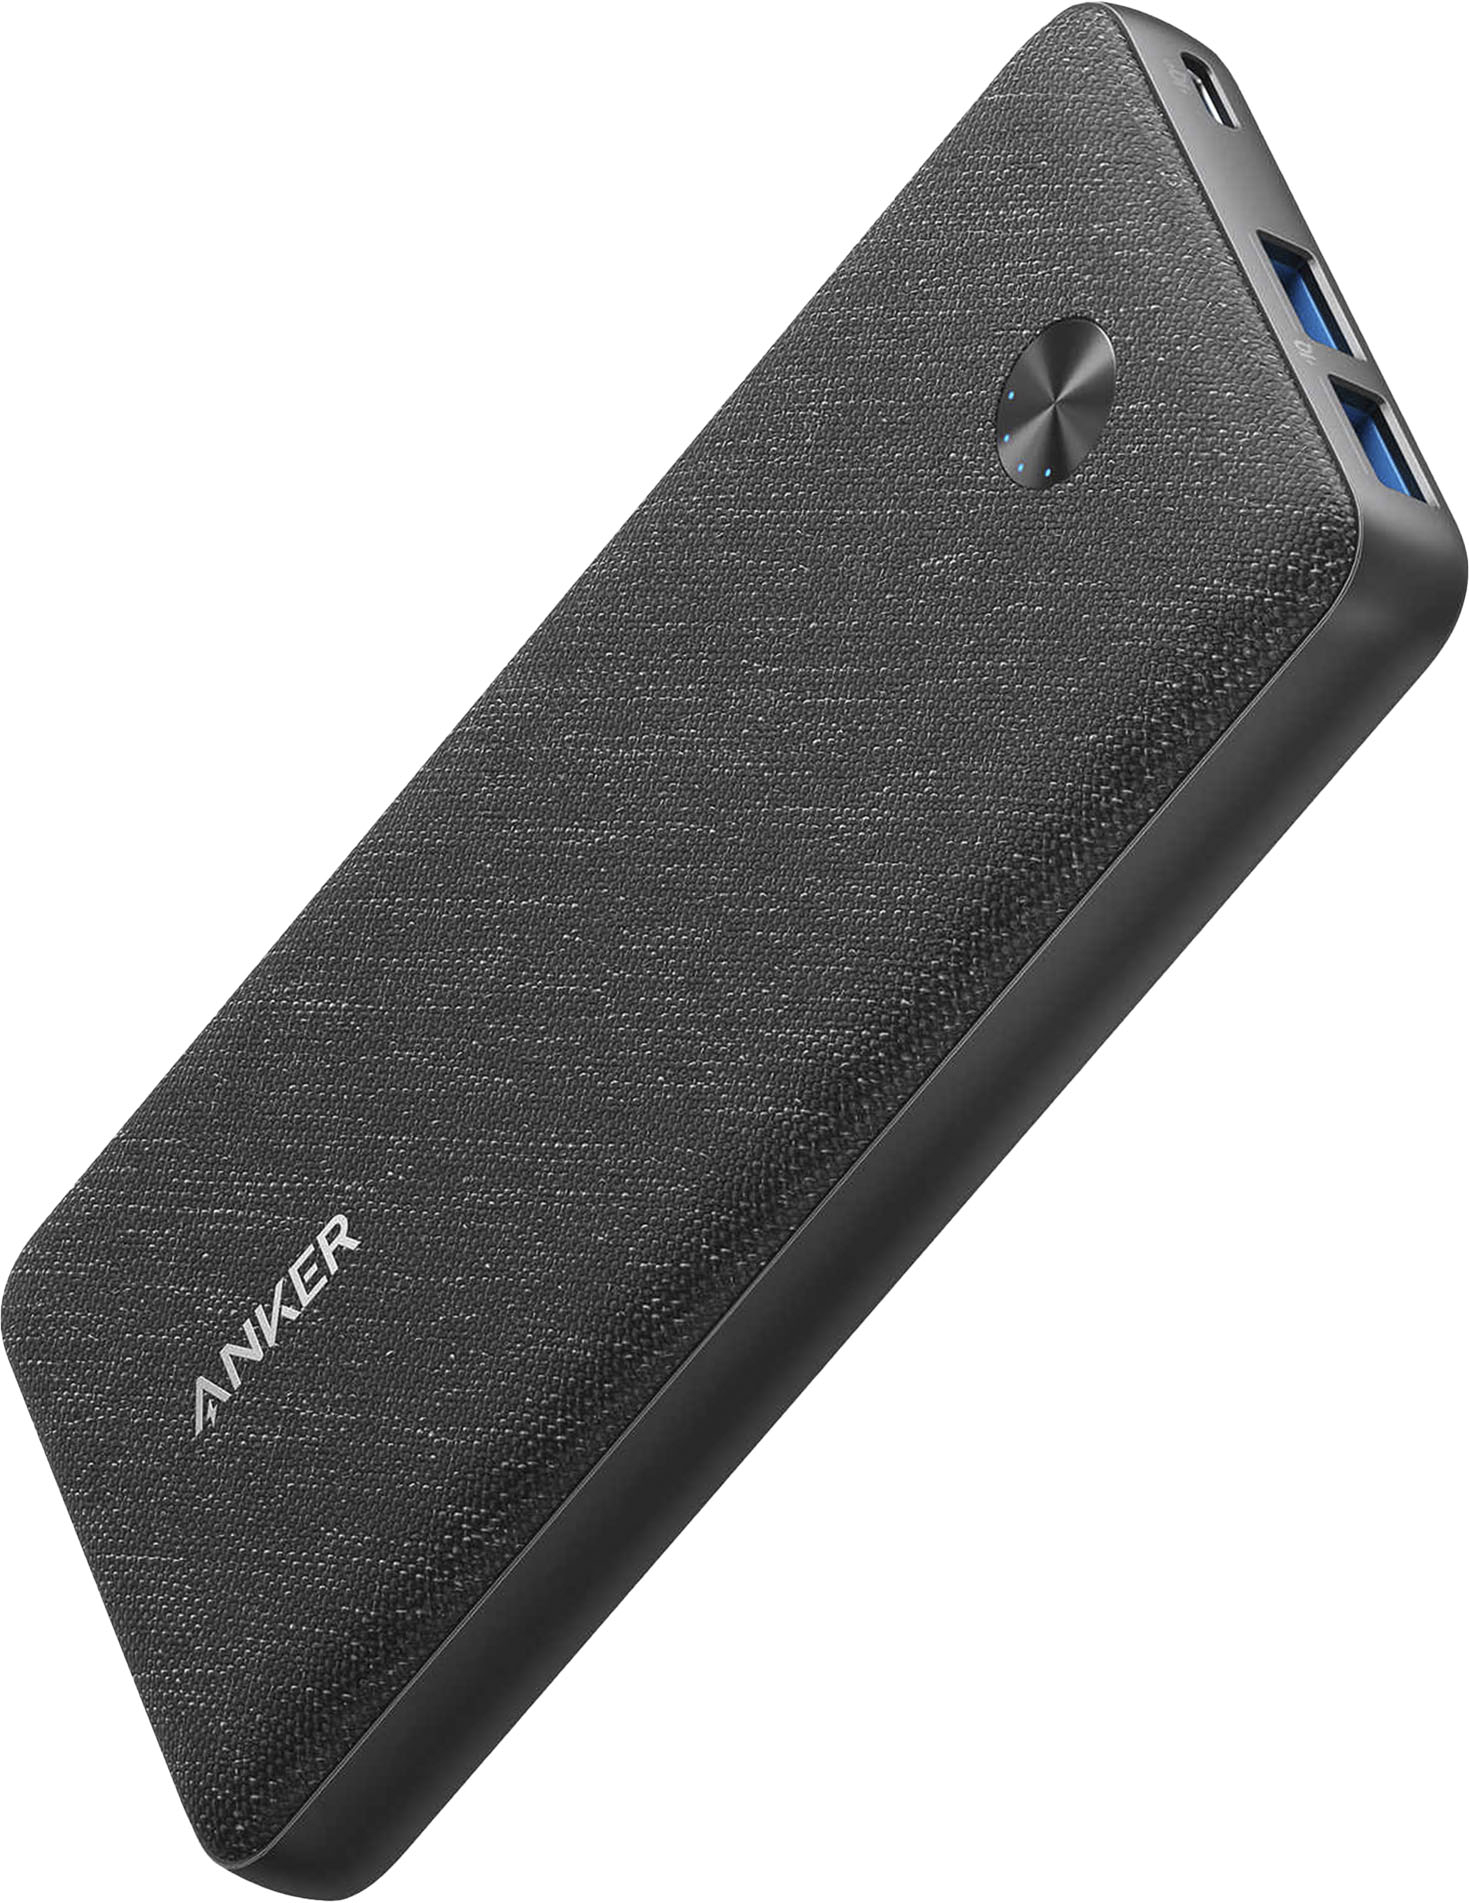 Anker PowerCore III Sense 20K USB-C Portable Battery Charger - Black